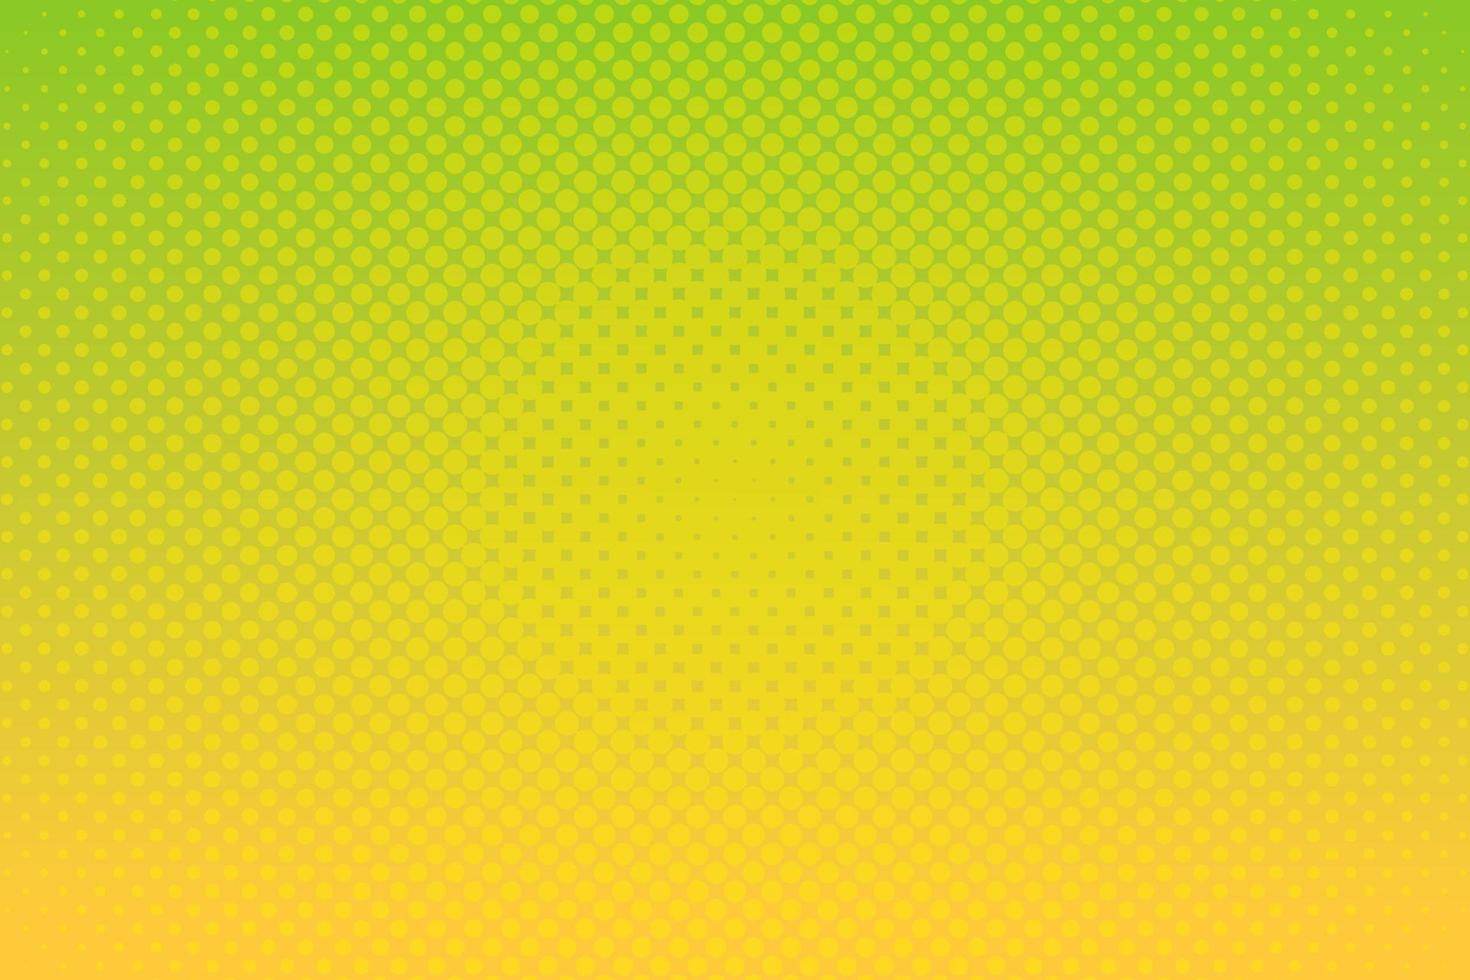 grüner gelber Pop-Art-Hintergrund mit Halbtonpunkten im Retro-Comic-Stil. Vektor-Illustration. vektor